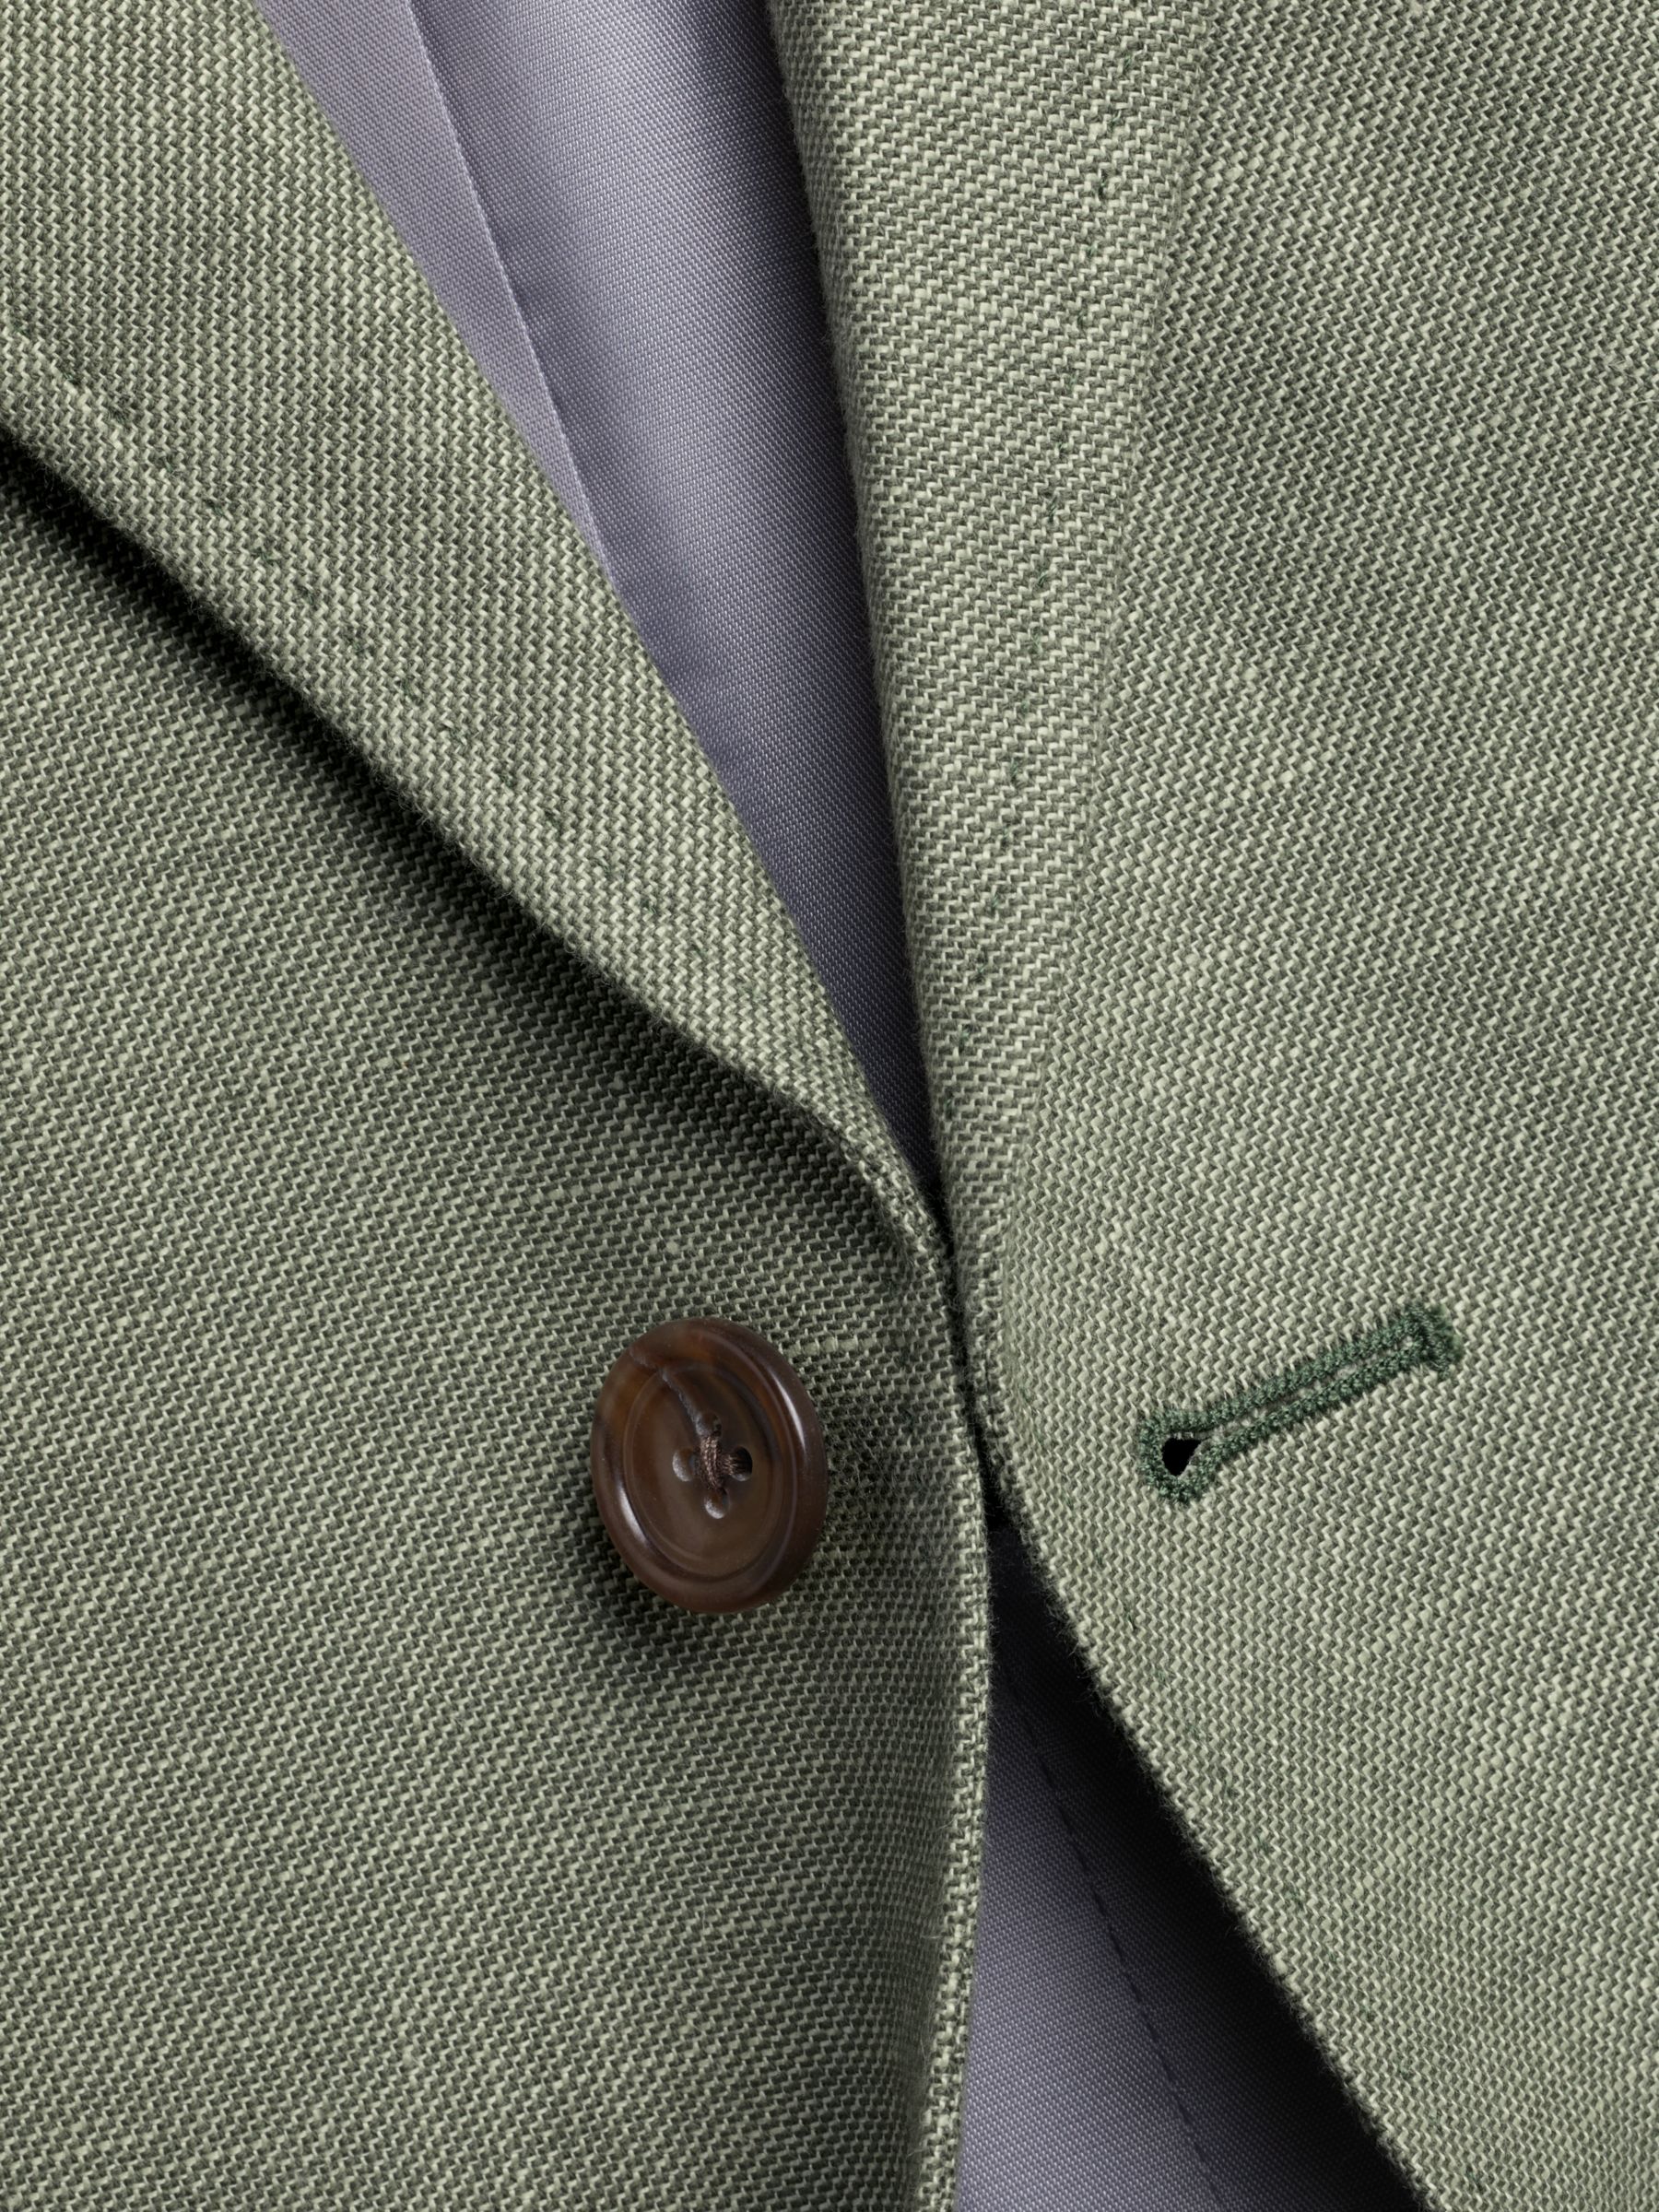 Charles Tyrwhitt Linen and Cotton Blend Slim Fit Blazer, Sage Green, 36R